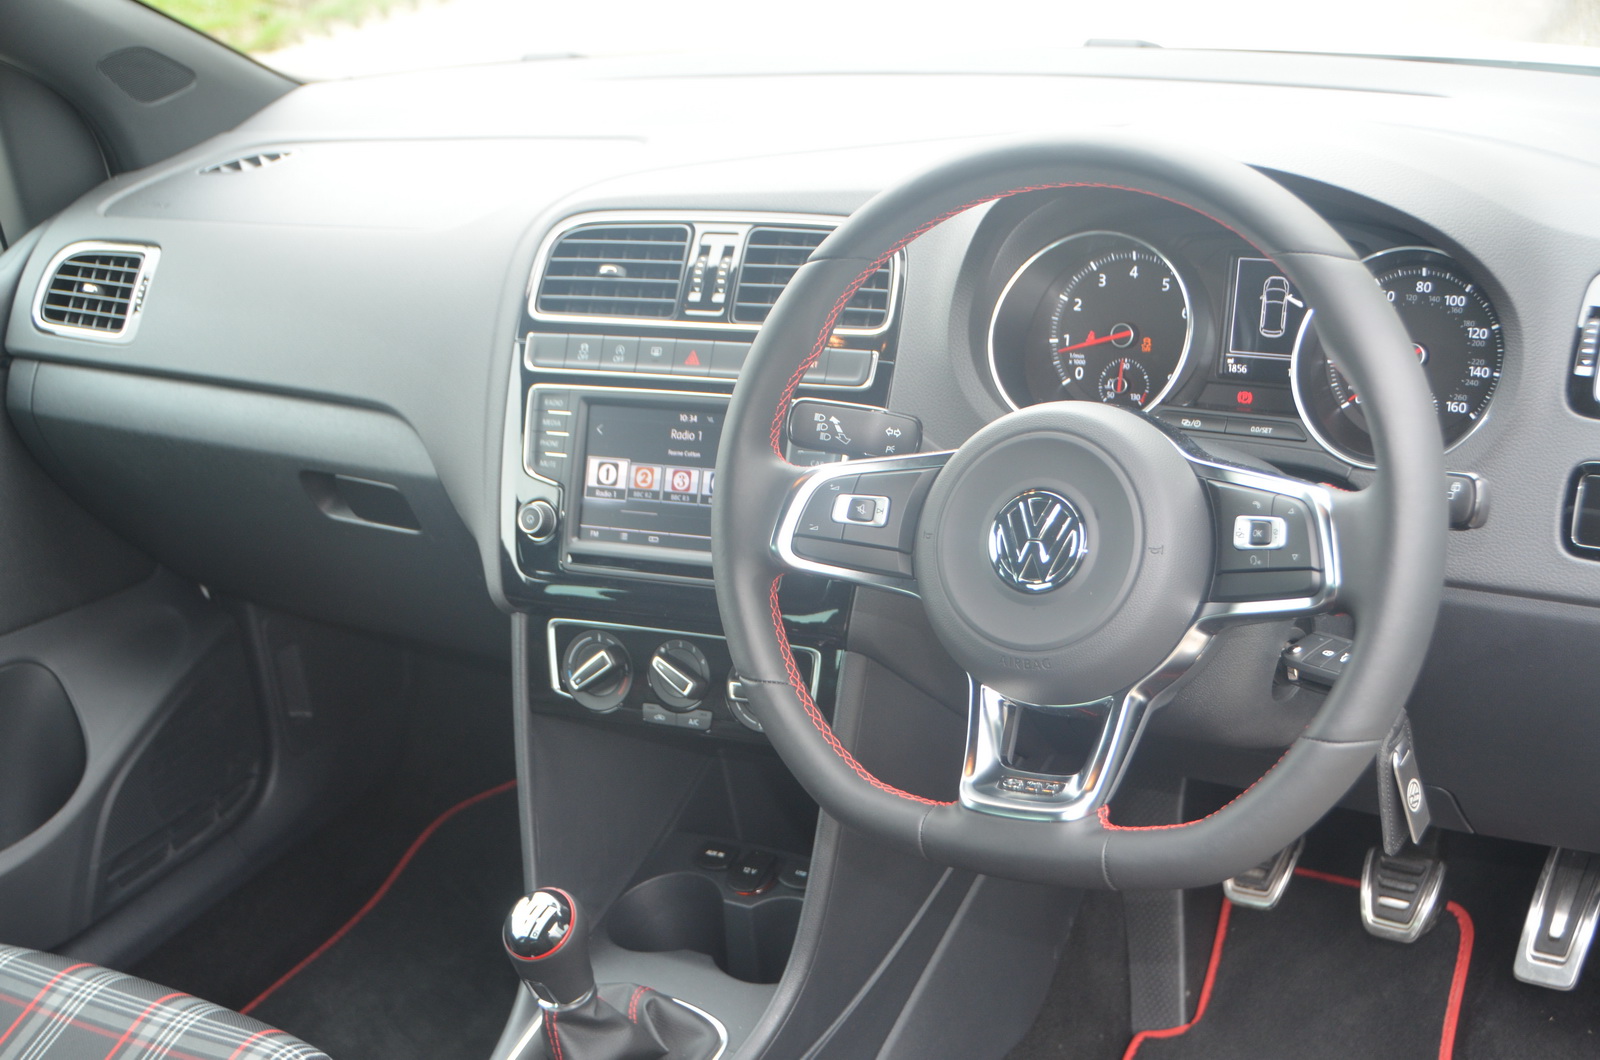 VW Polo GTI Takes Shape In Unofficial Renderings Ahead Of Debut